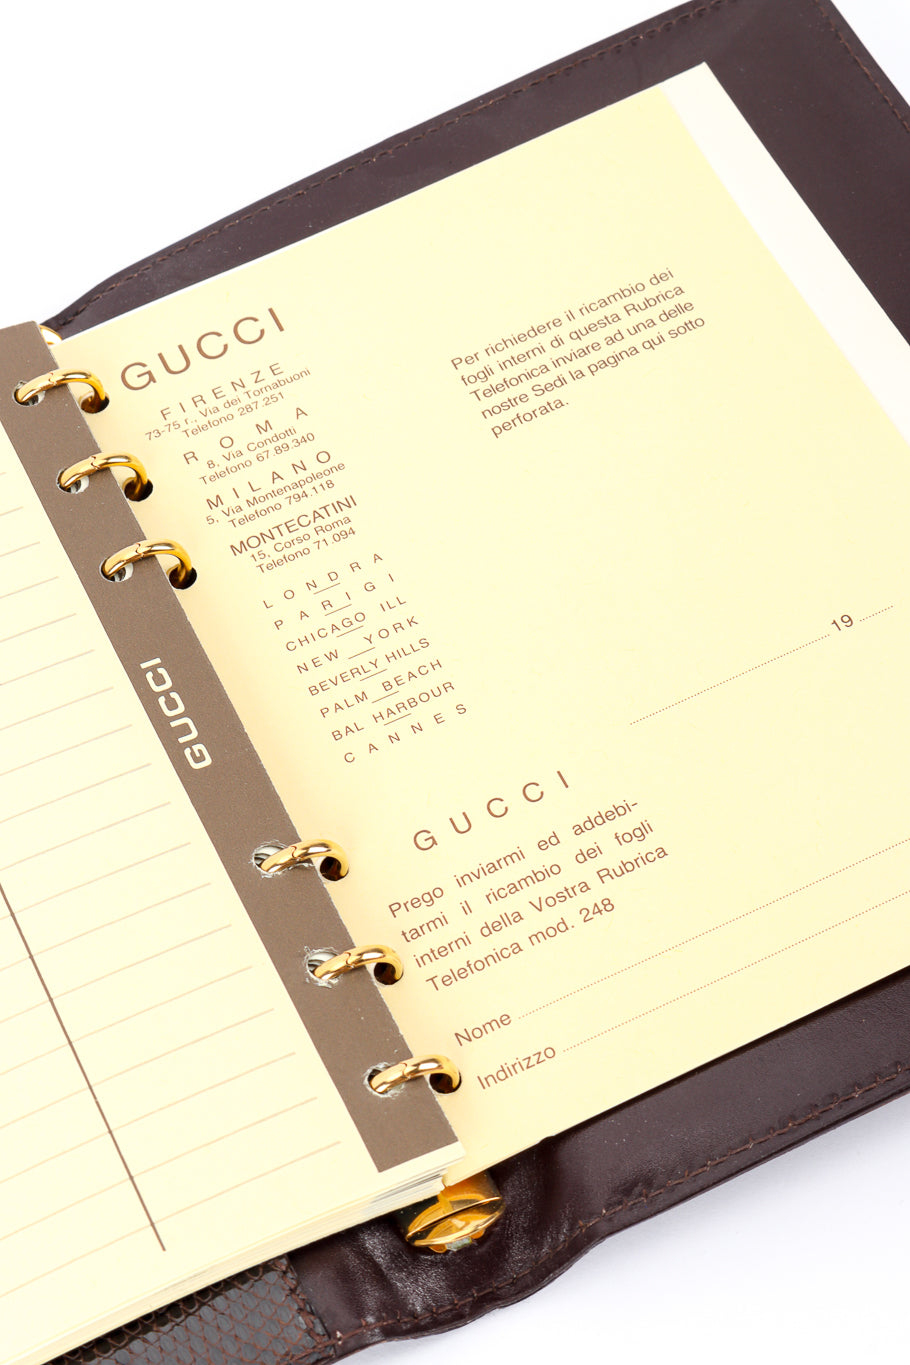 Lizard Skin Address Book by Gucci contents page in Italian @recessla